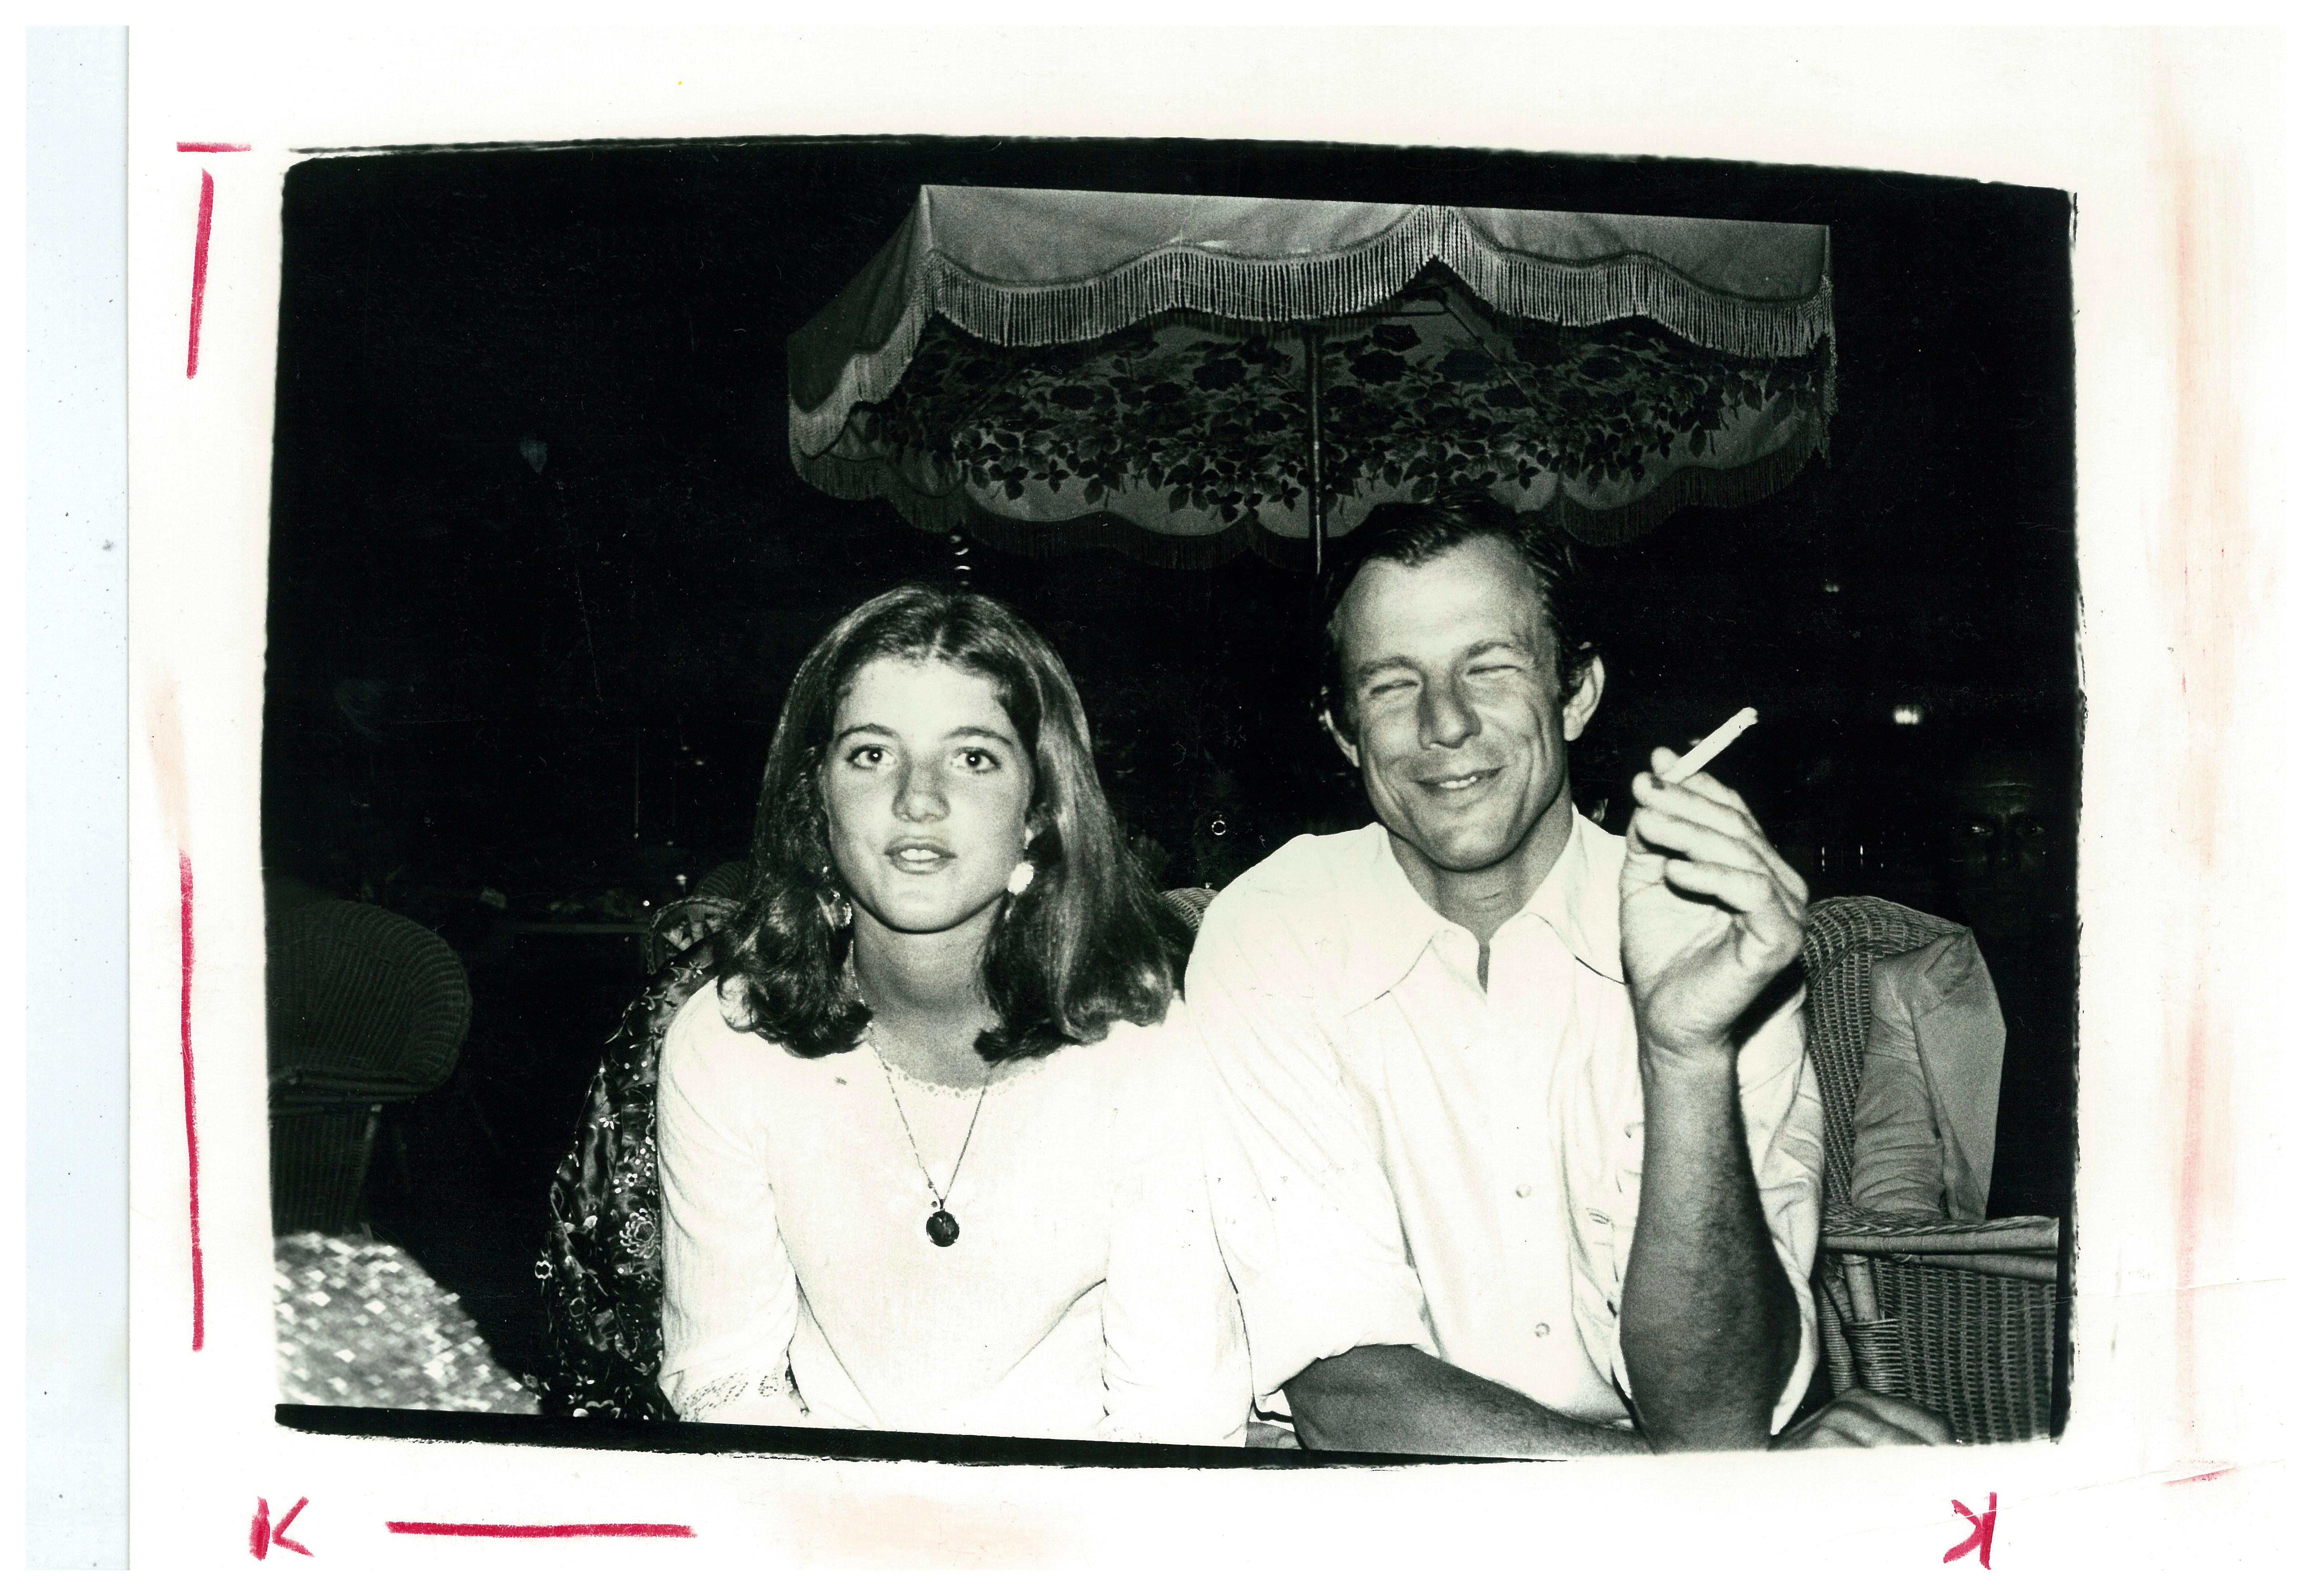 Andy Warhol, Photograph of Caroline Kennedy and Peter Beard